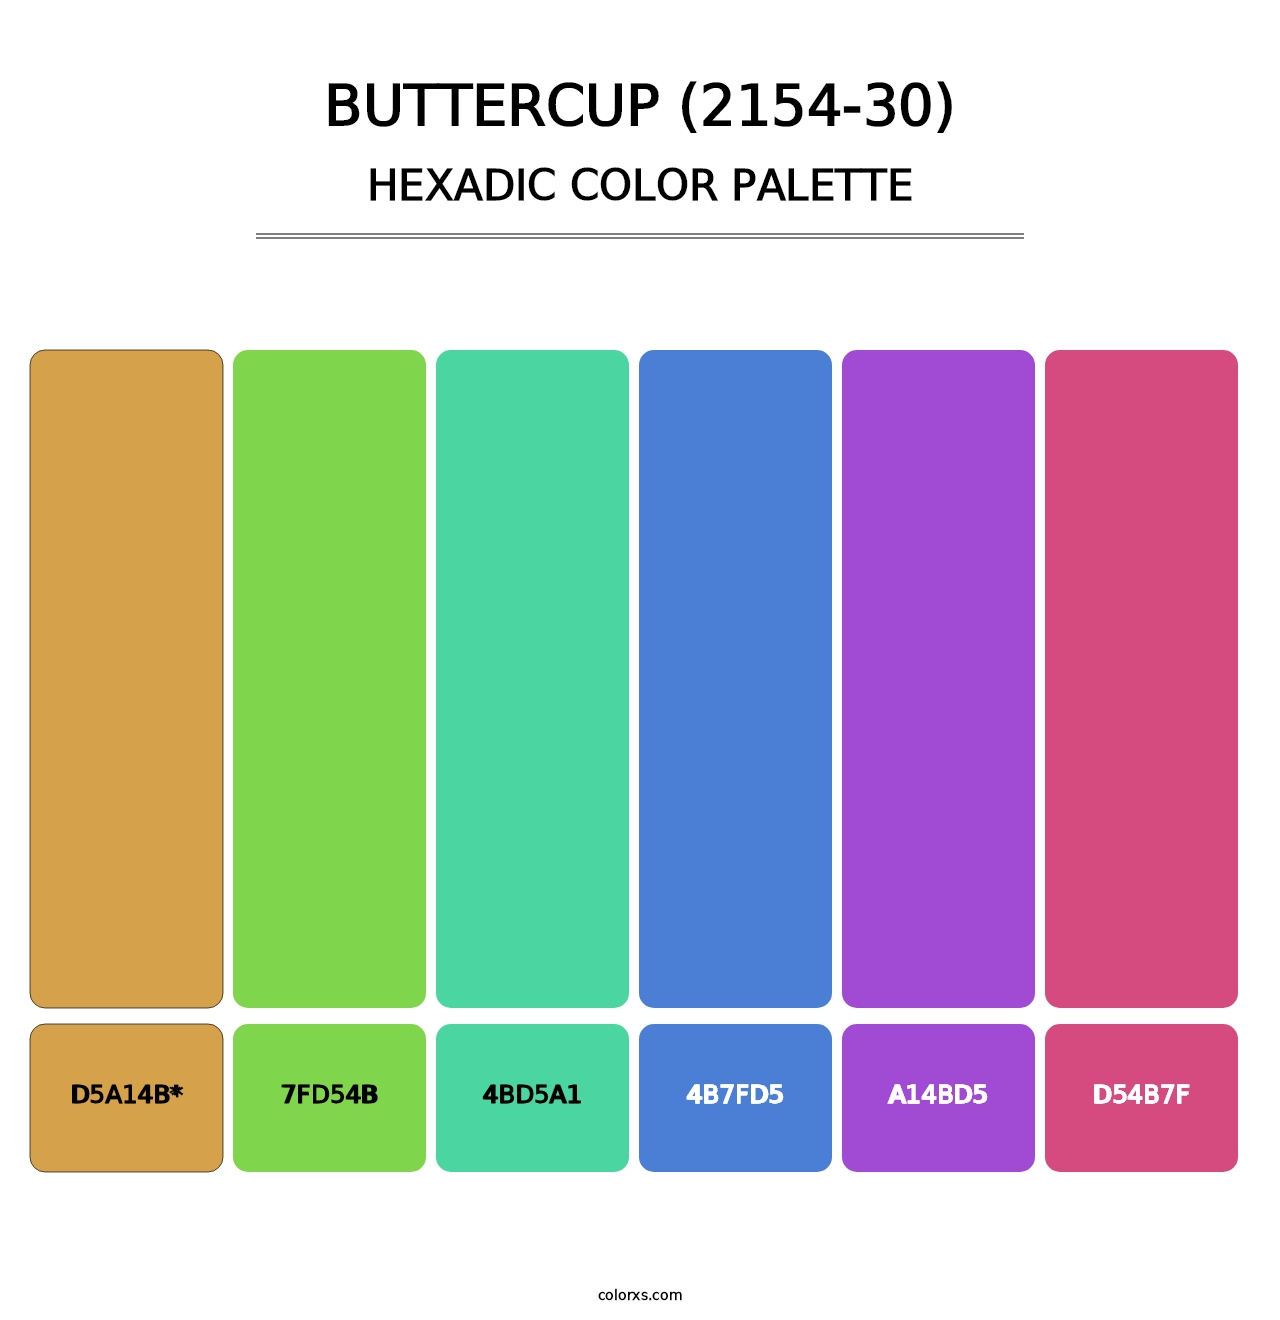 Buttercup (2154-30) - Hexadic Color Palette